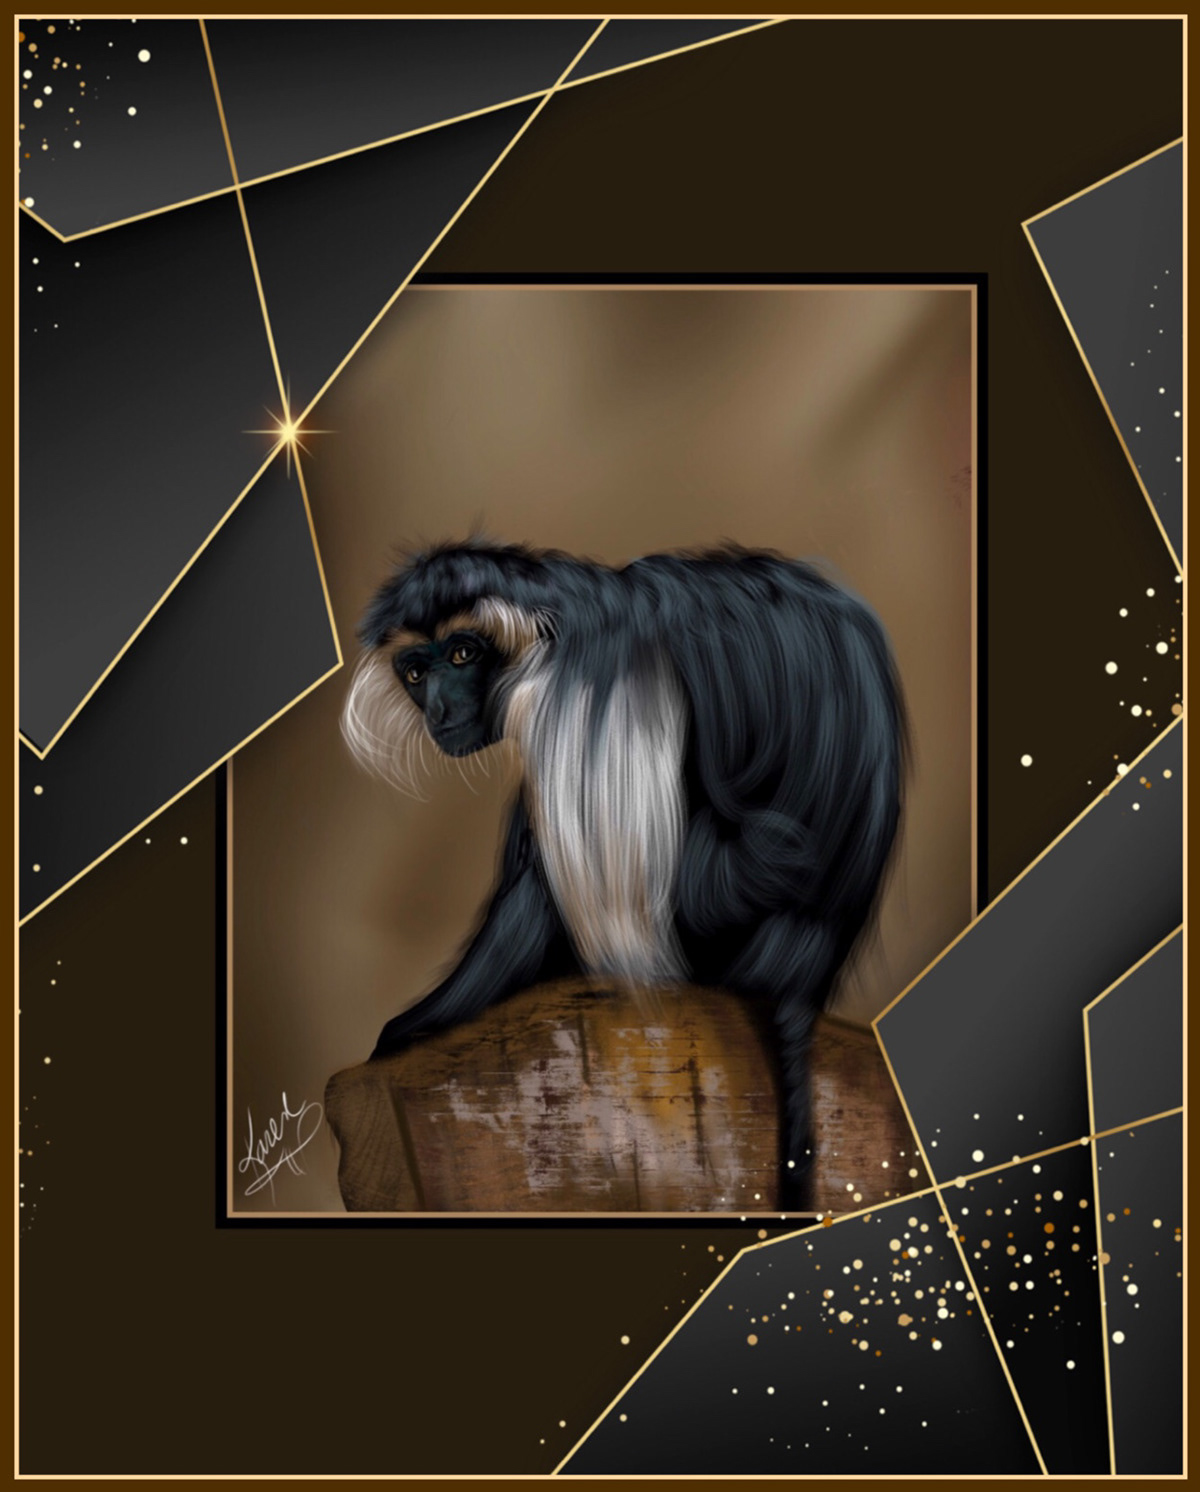 Digital Art  digital painting Drawing  illustrations animals primate monkey colobus monkey